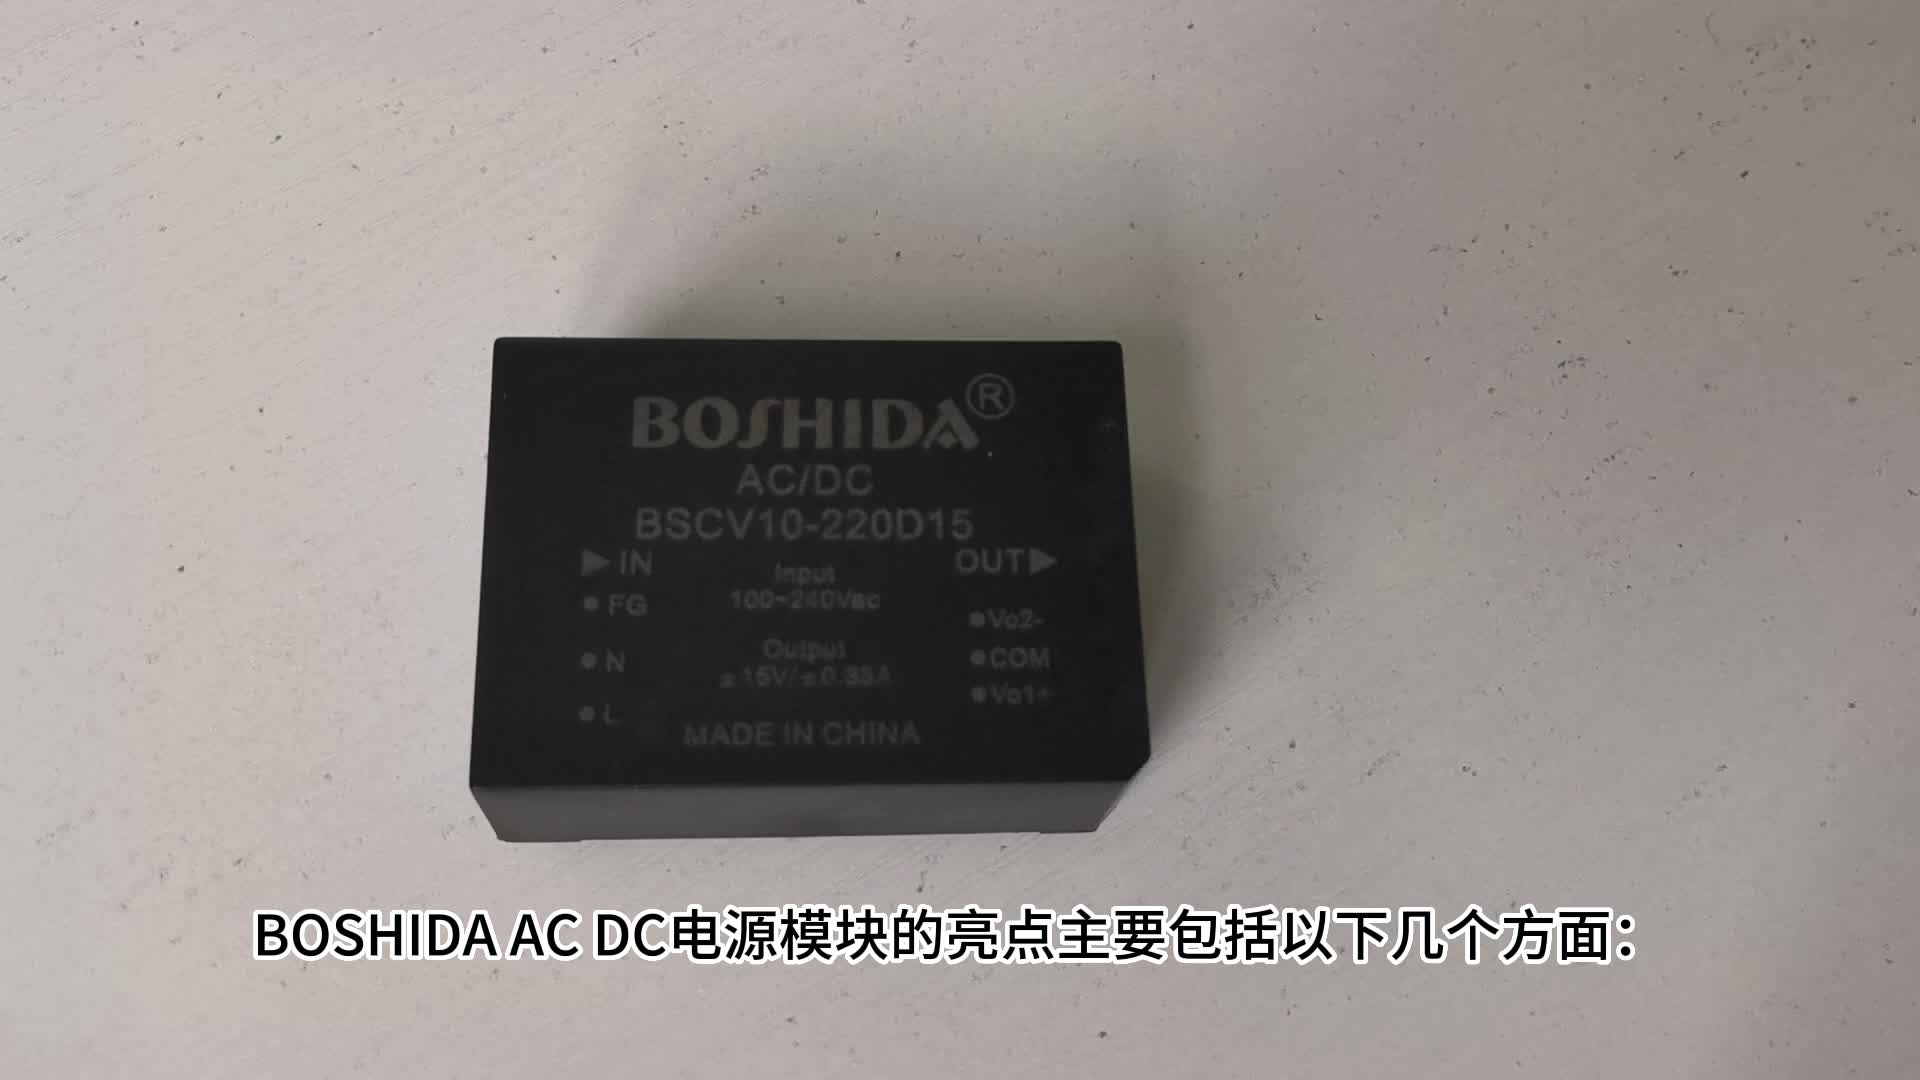 BOSHIDA AC DC电源模块的主要几个特点